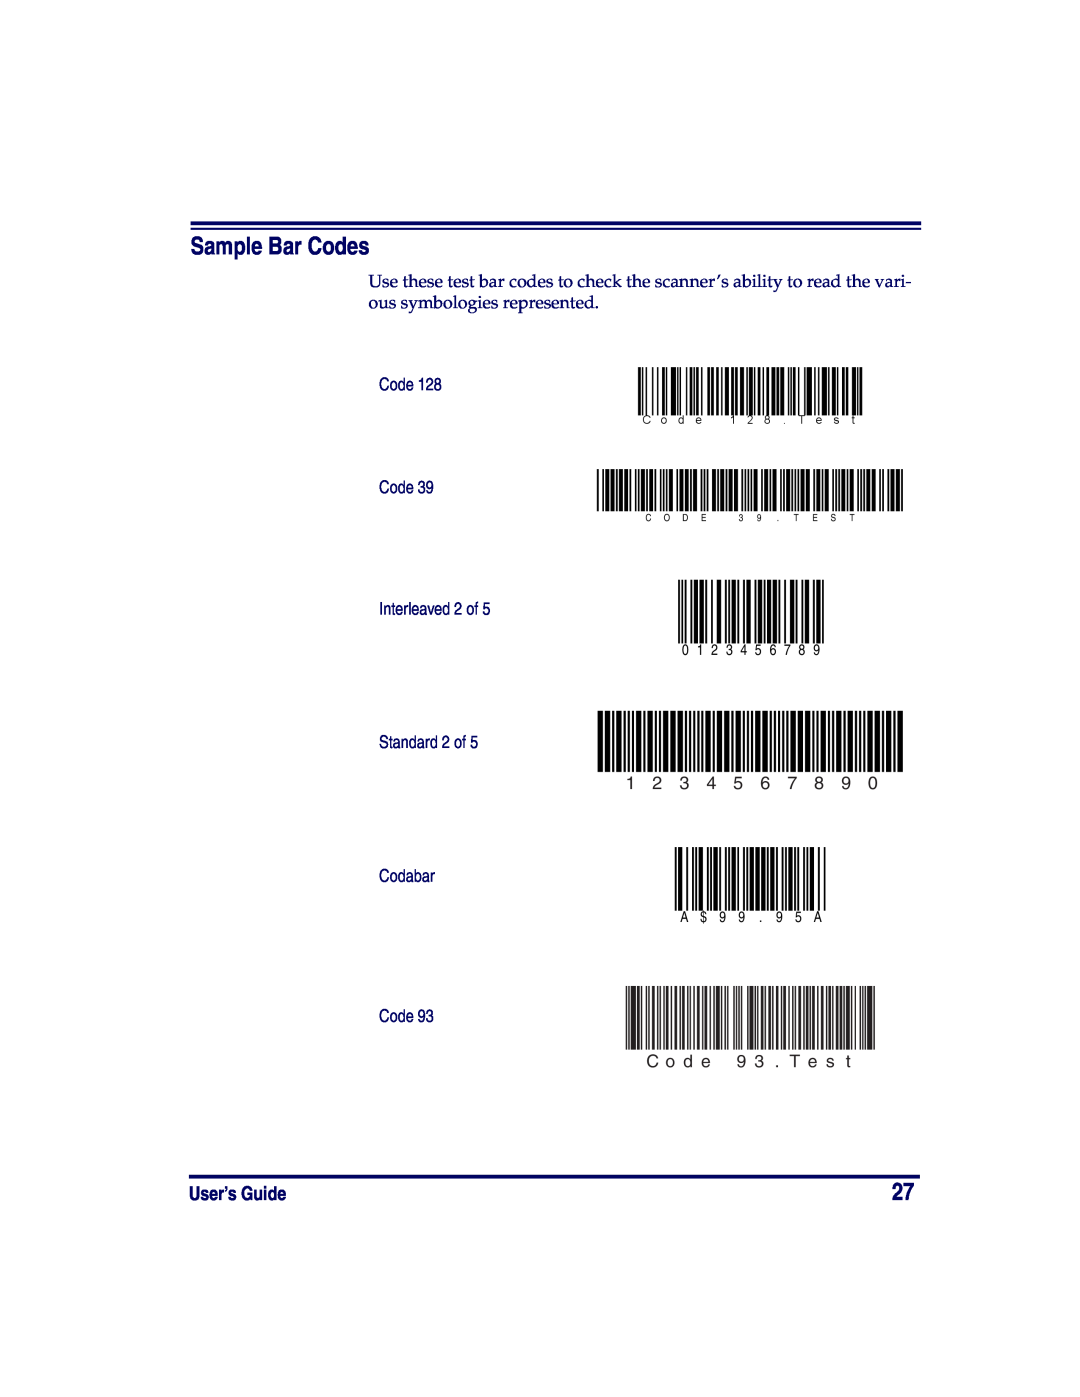 Datalogic Scanning HD Sample Bar Codes, C o d e 9 3 . T e s t, User’s Guide, 0 1 2 3 4 5, A $ 9 9 . 9 5 A, 1 2 8 . T e s t 